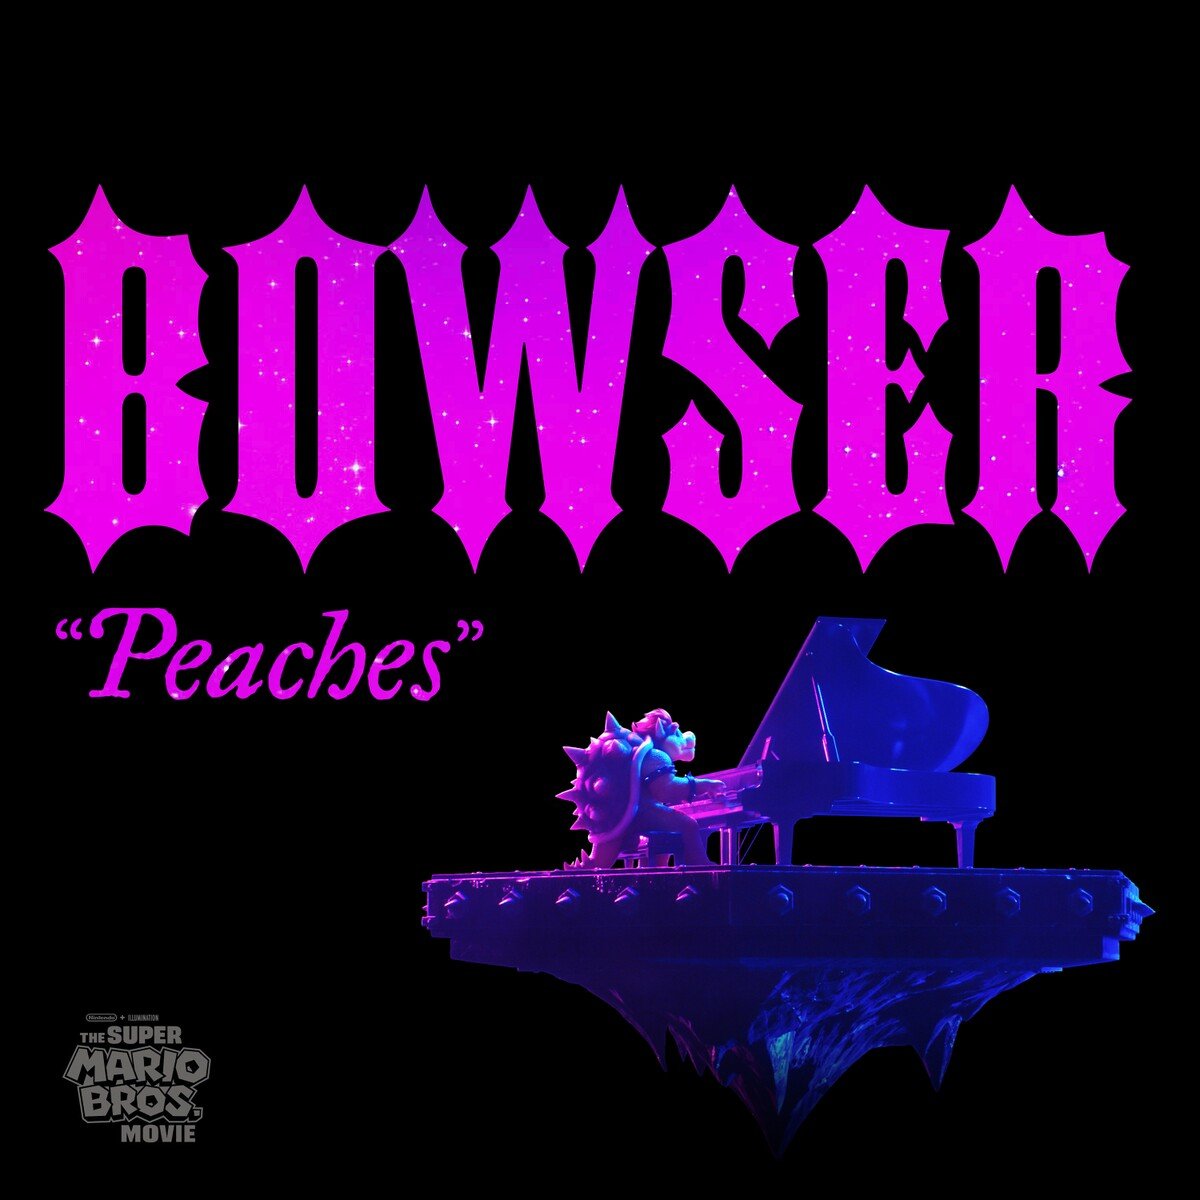 Peaches - Bowser (The Super Mario Bros. Movie)